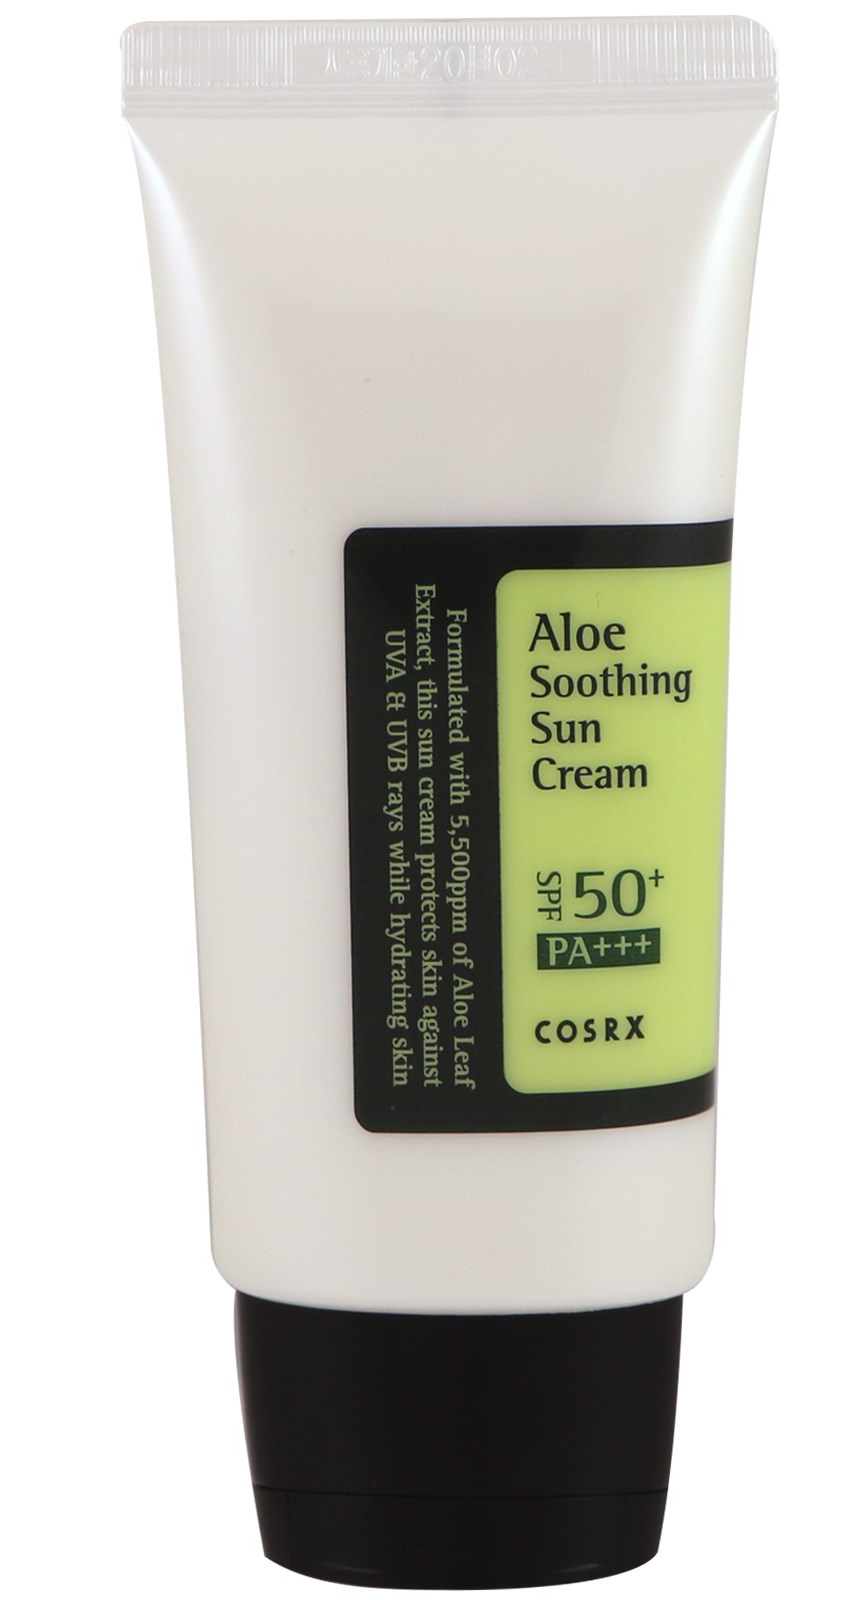 COSRX Aloe Soothing Sun Cream Spf50 Pa+++